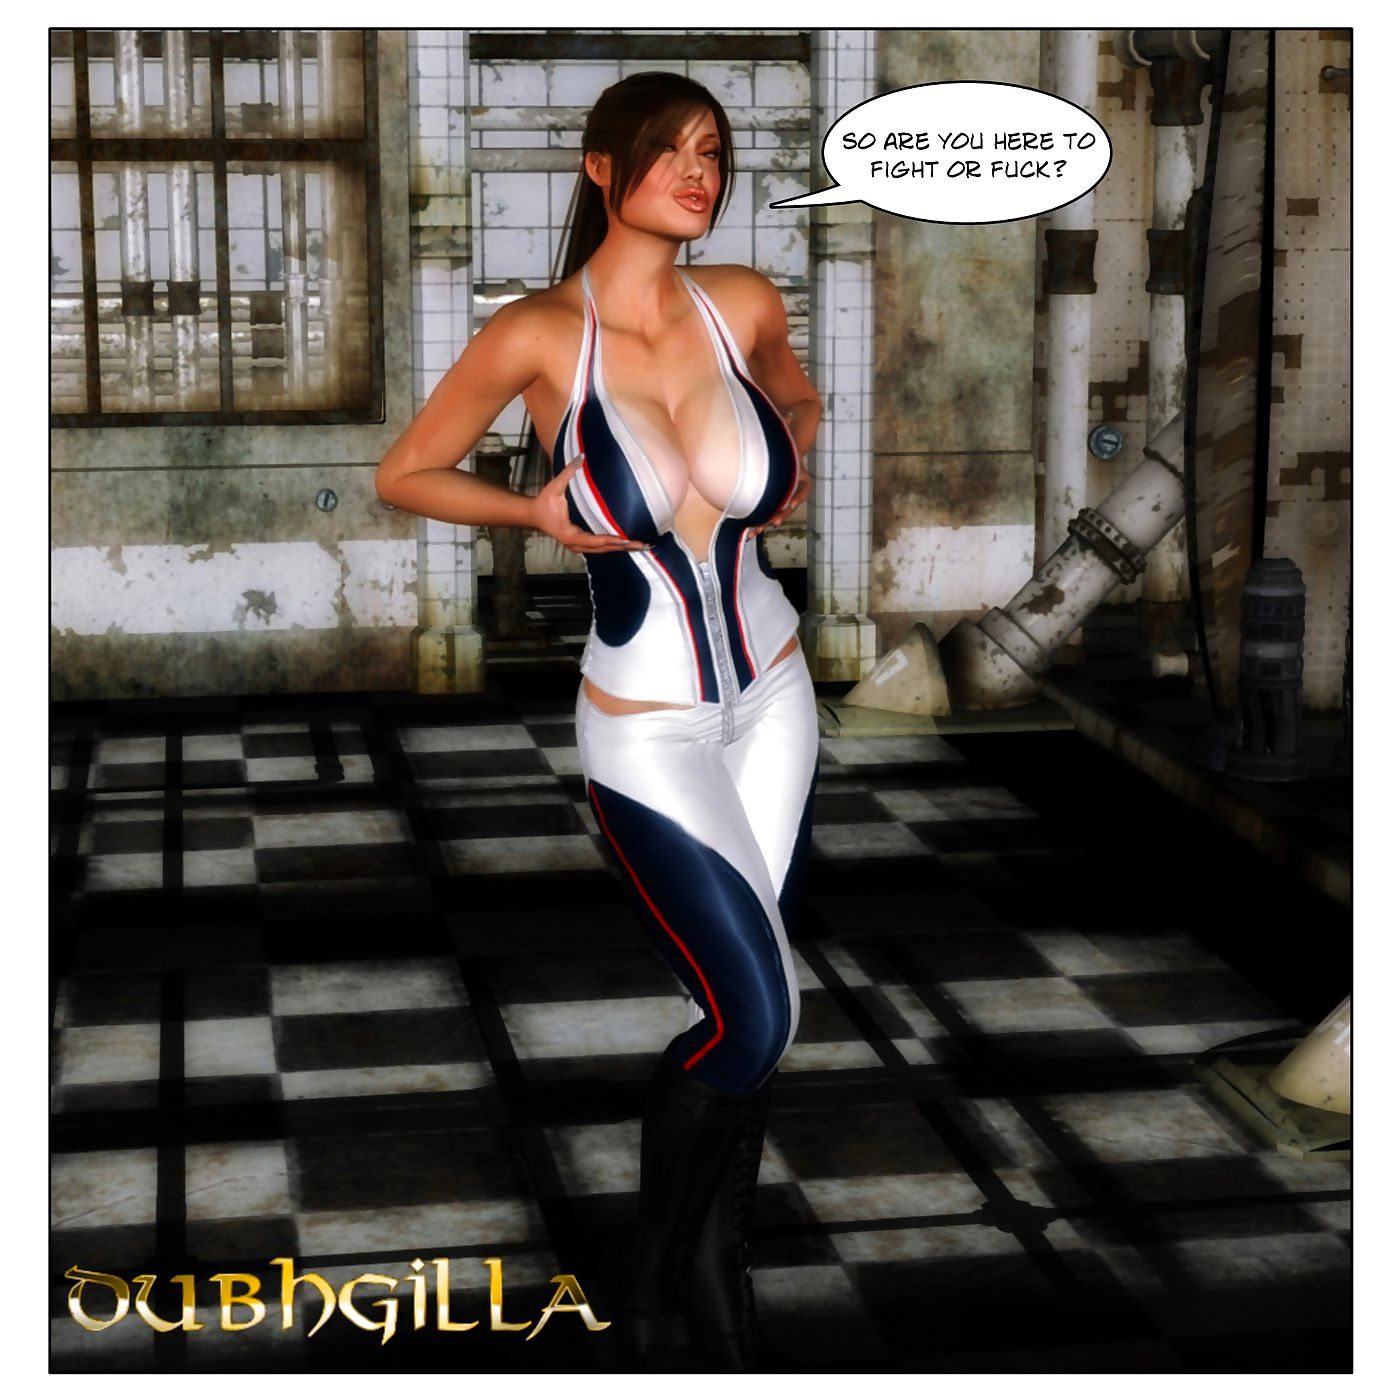 Lara Angelina fan neuken dubhgilla page 1